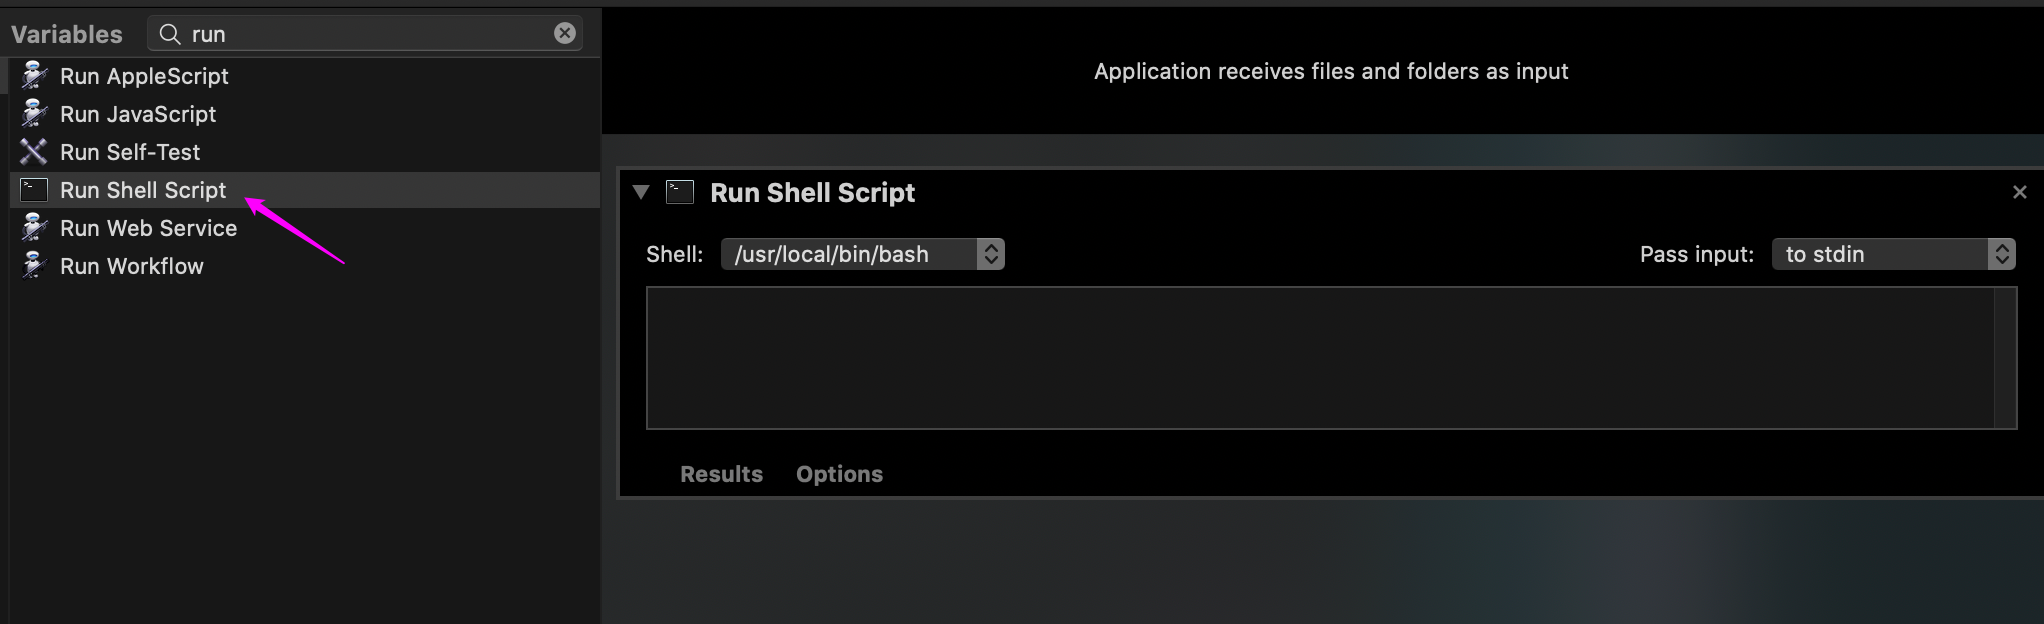 Automator.app » select Run Shell Script